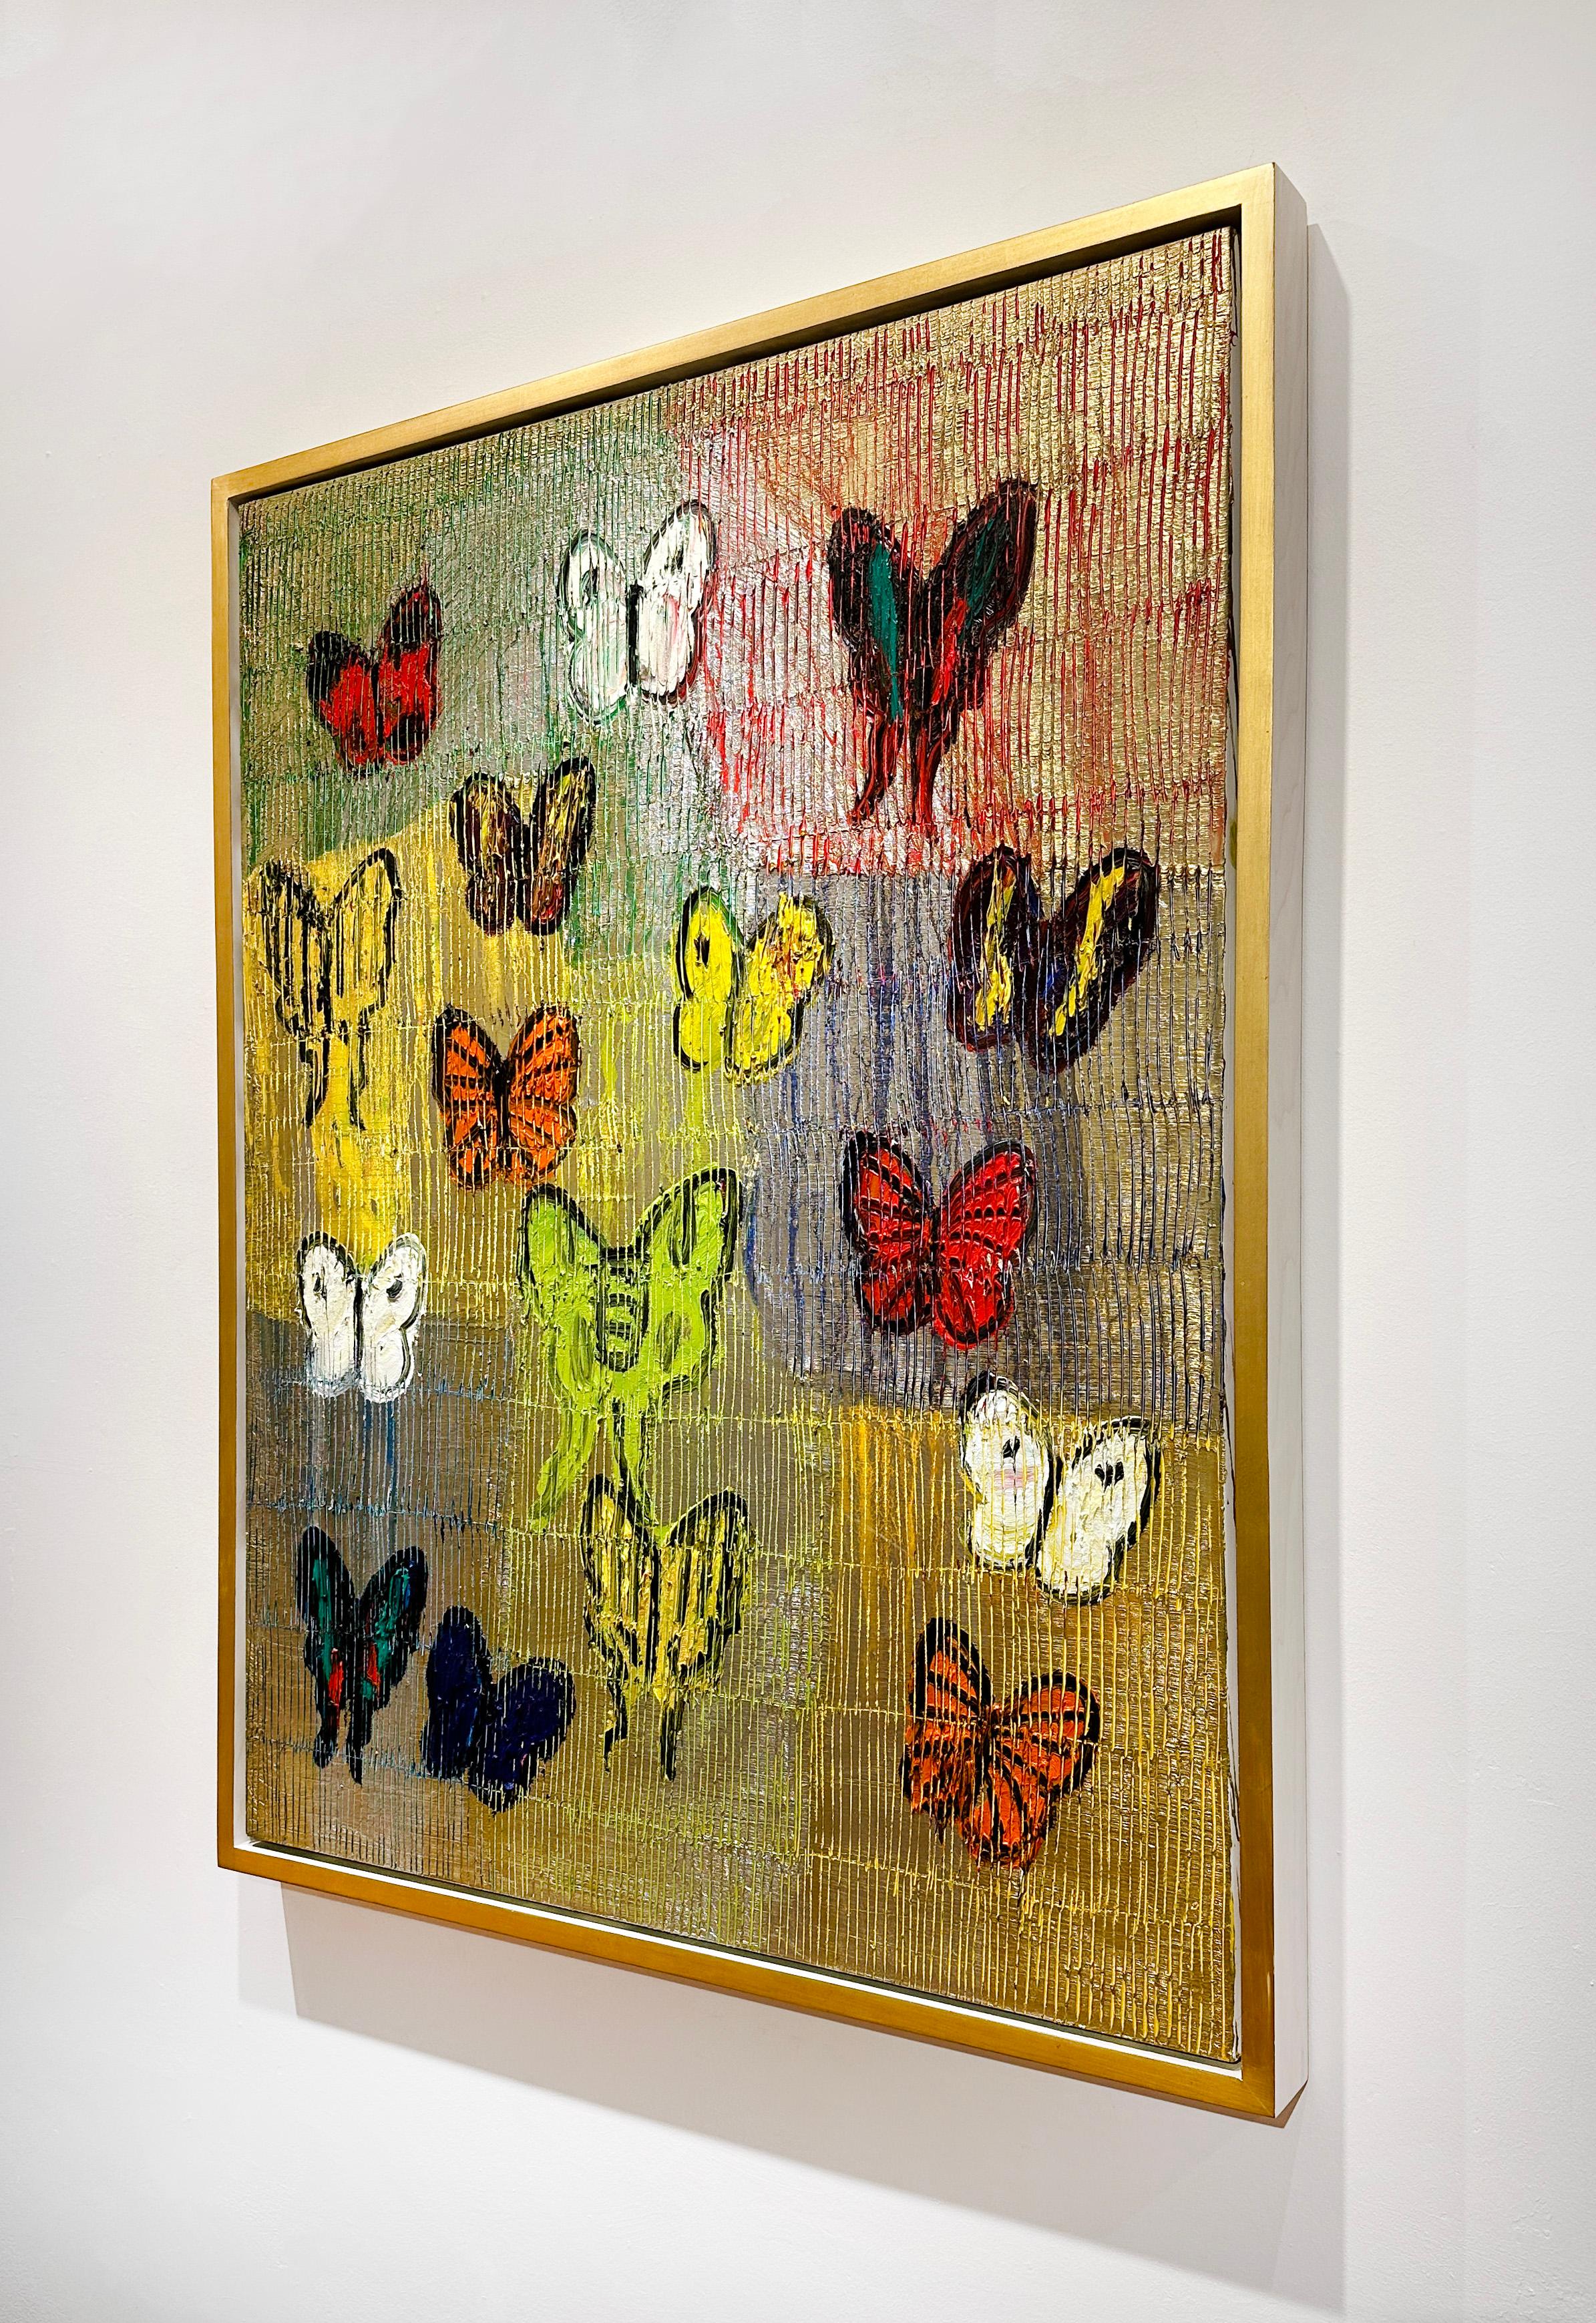 Artist:  Slonem, Hunt
Title:  Spice Bush
Series:  Butterflies
Date:  2021
Medium:  Oil on canvas
Unframed Dimensions:  40